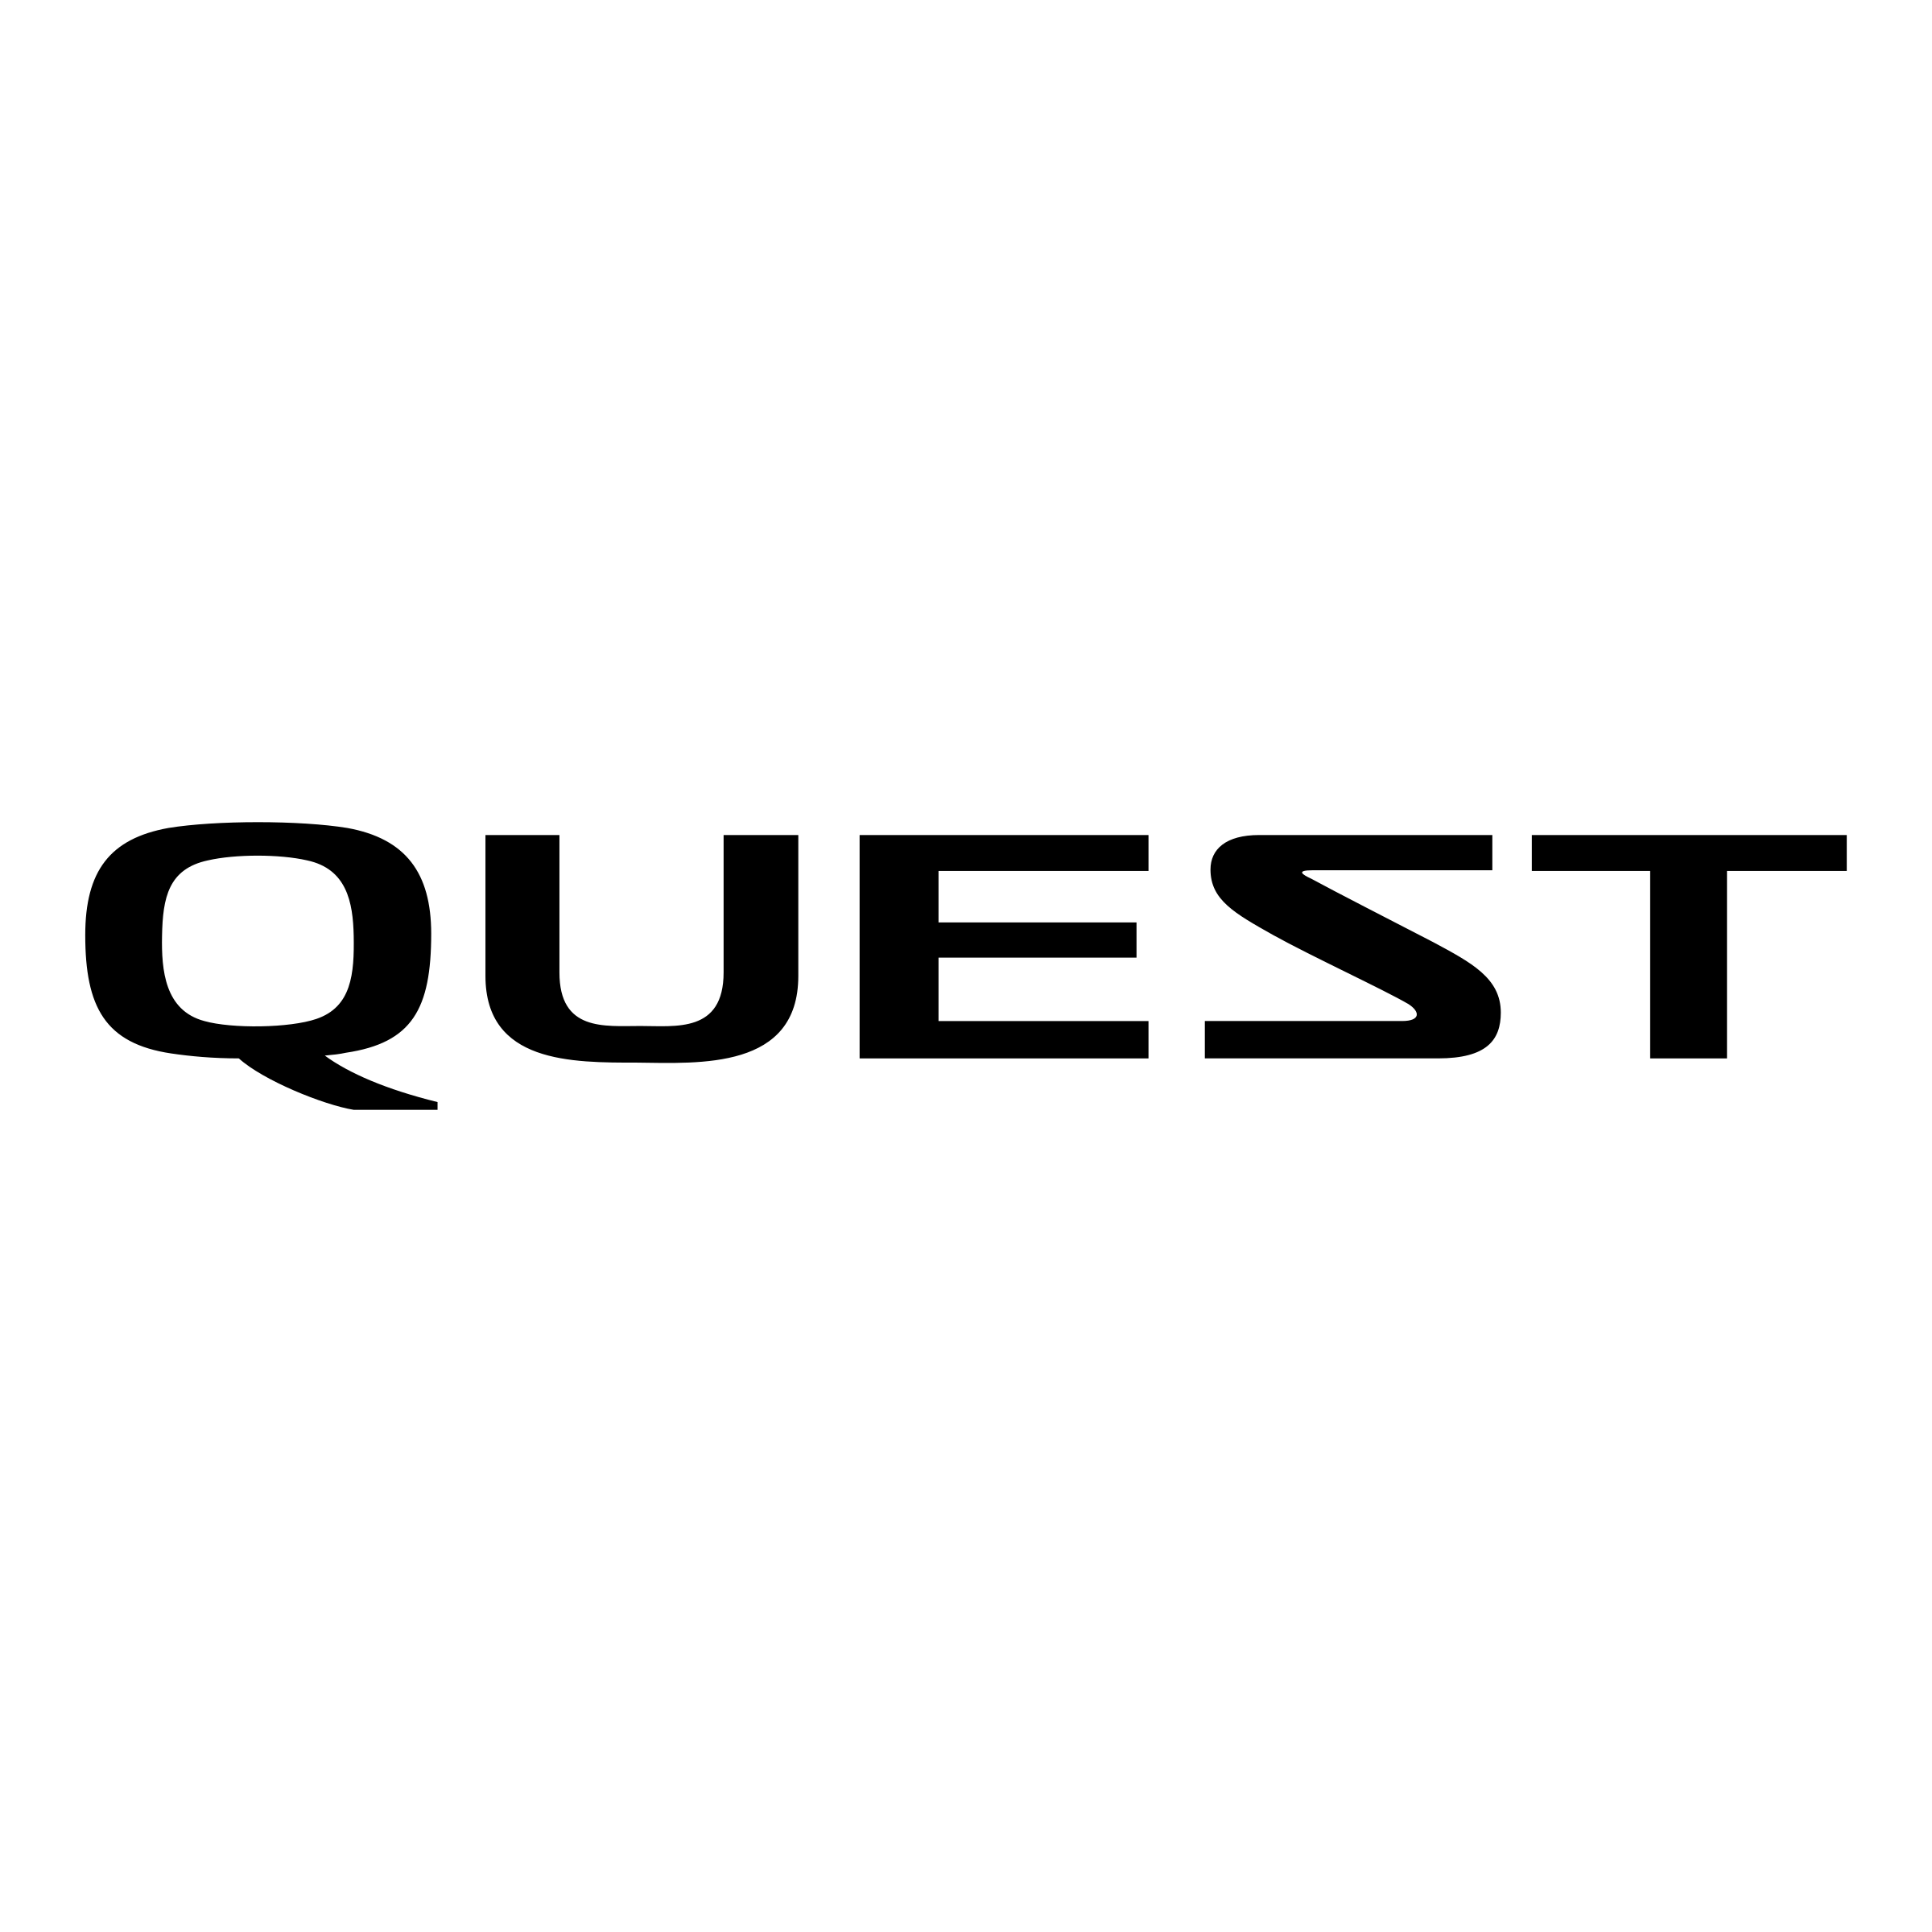 Quest Logo - Quest Logo PNG Transparent & SVG Vector - Freebie Supply